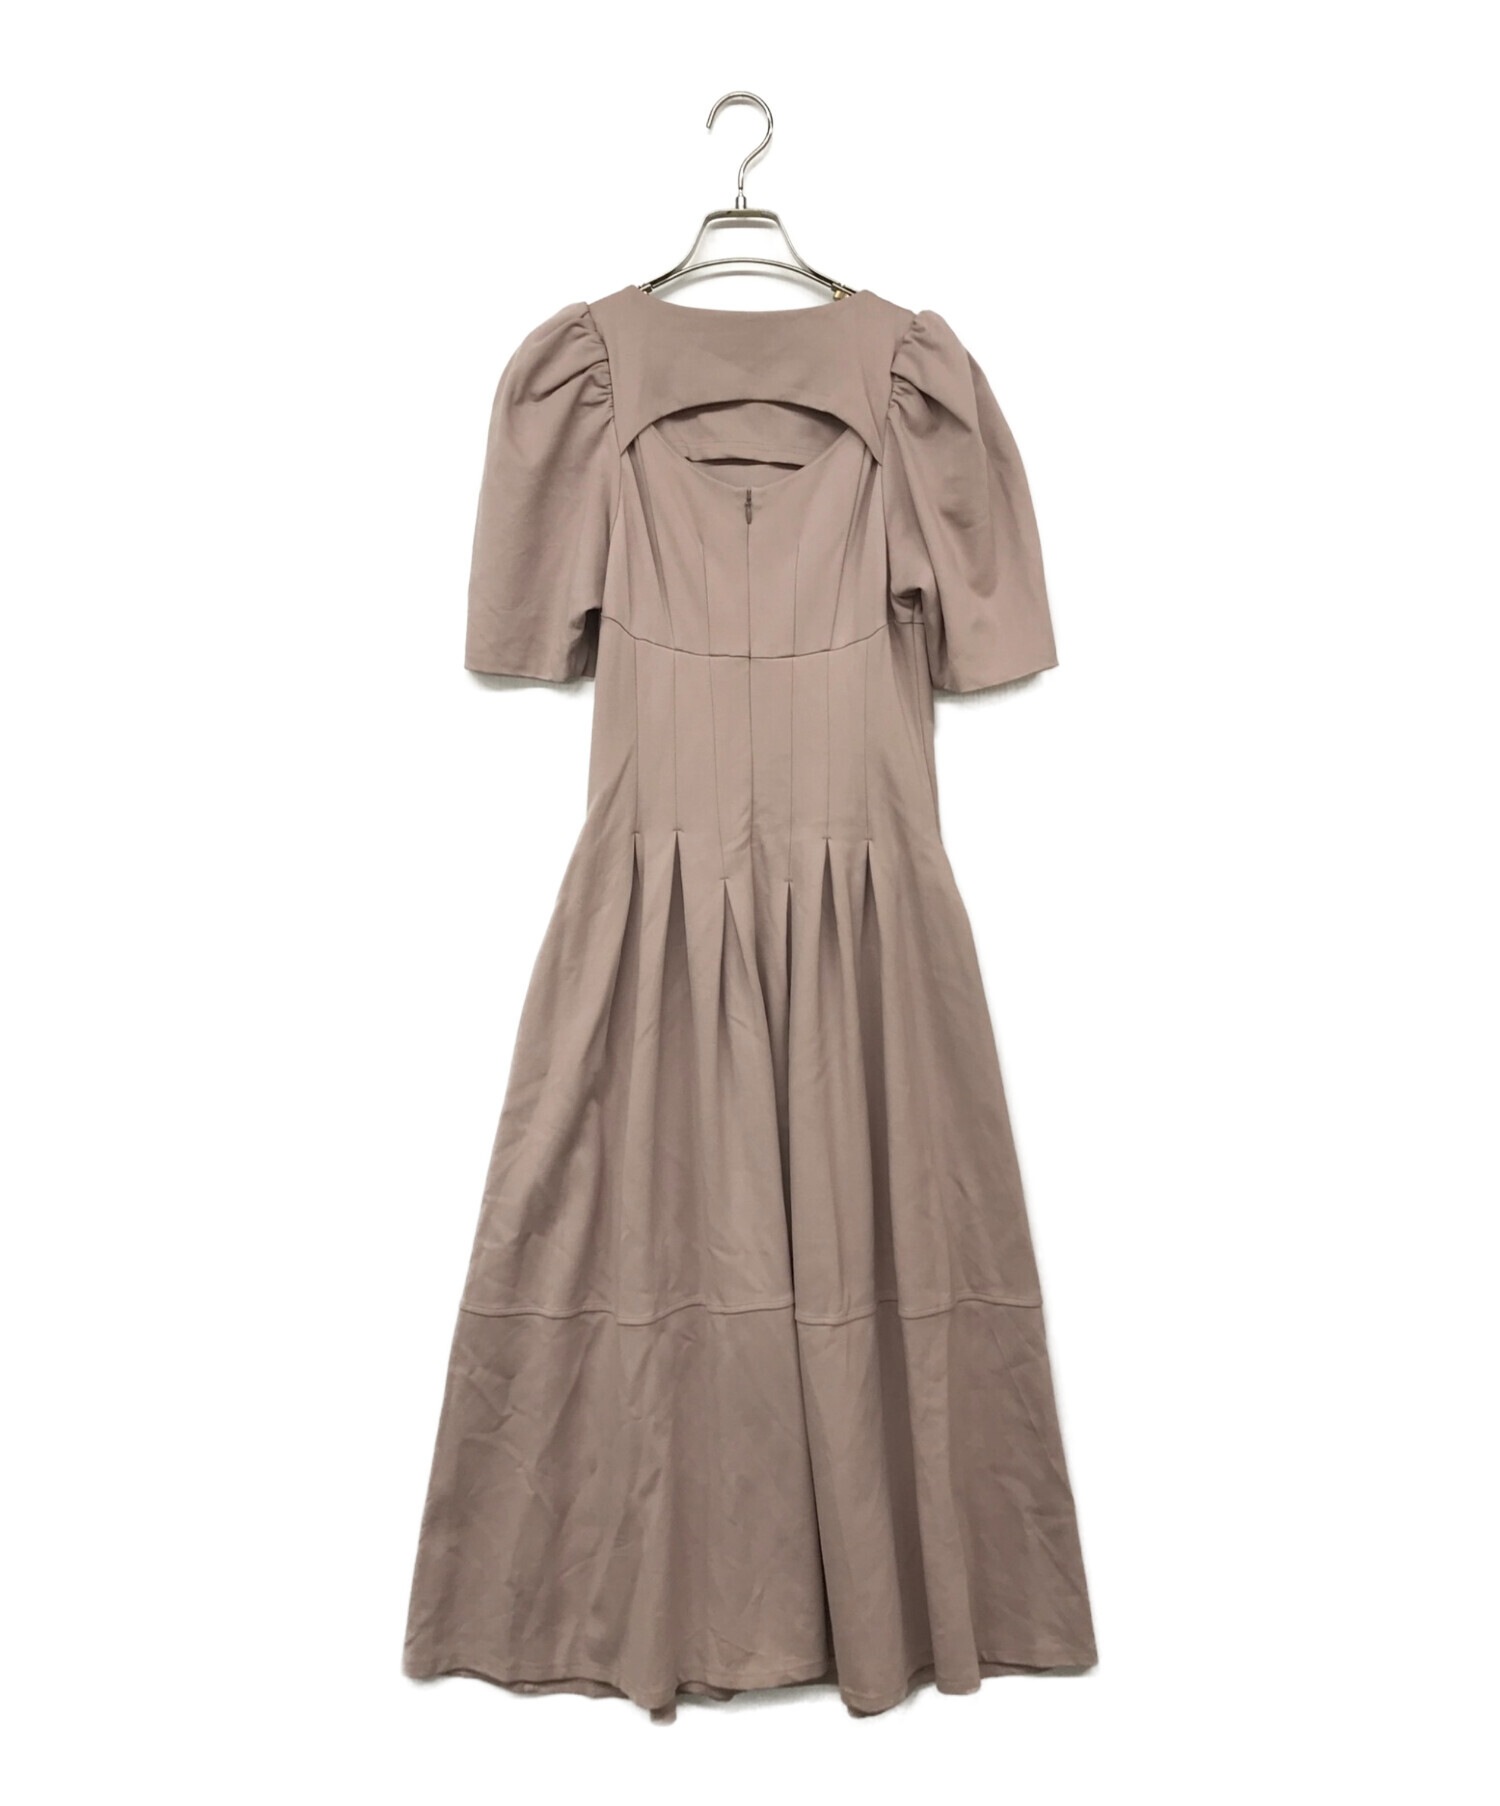 HER LIP TO (ハーリップトゥ) Marylebone Short-Sleeve Dress/メアリルボーンショートスリーブドレス ピンク  サイズ:M